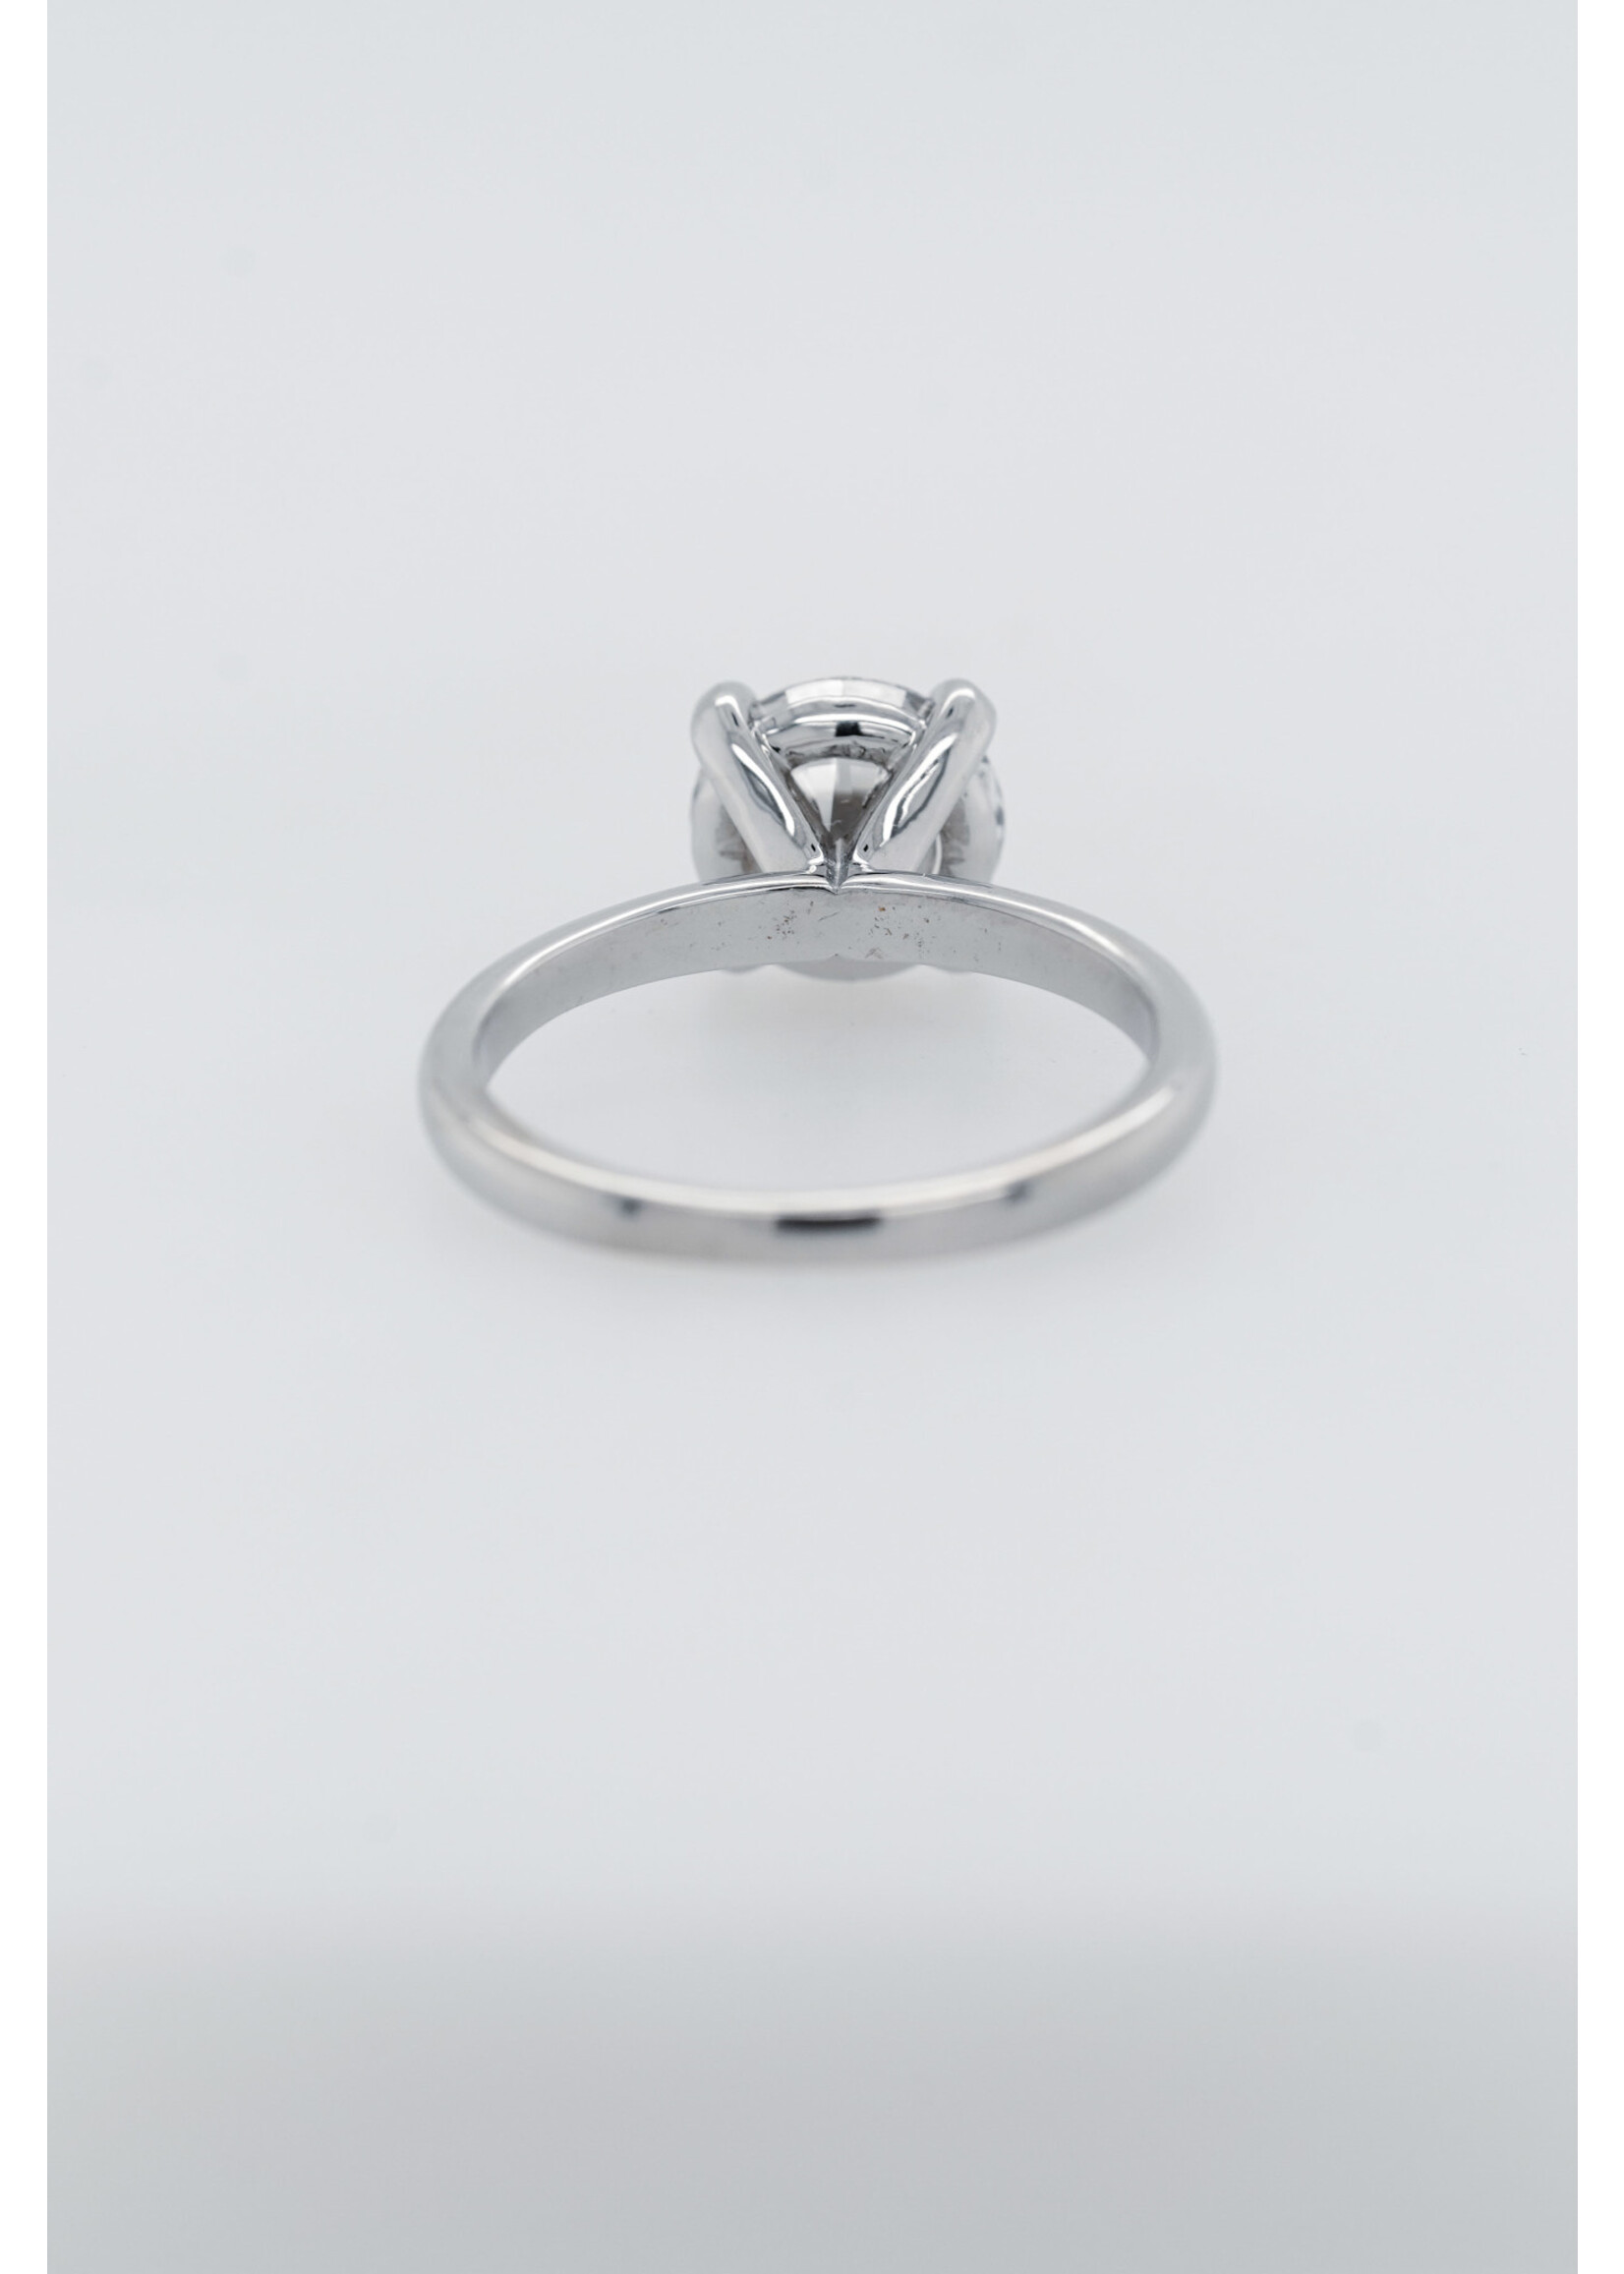 14KW 3.41g 2.02ct F/SI1 IGI Lab Grown Round Diamond Engagement Ring (size 7)